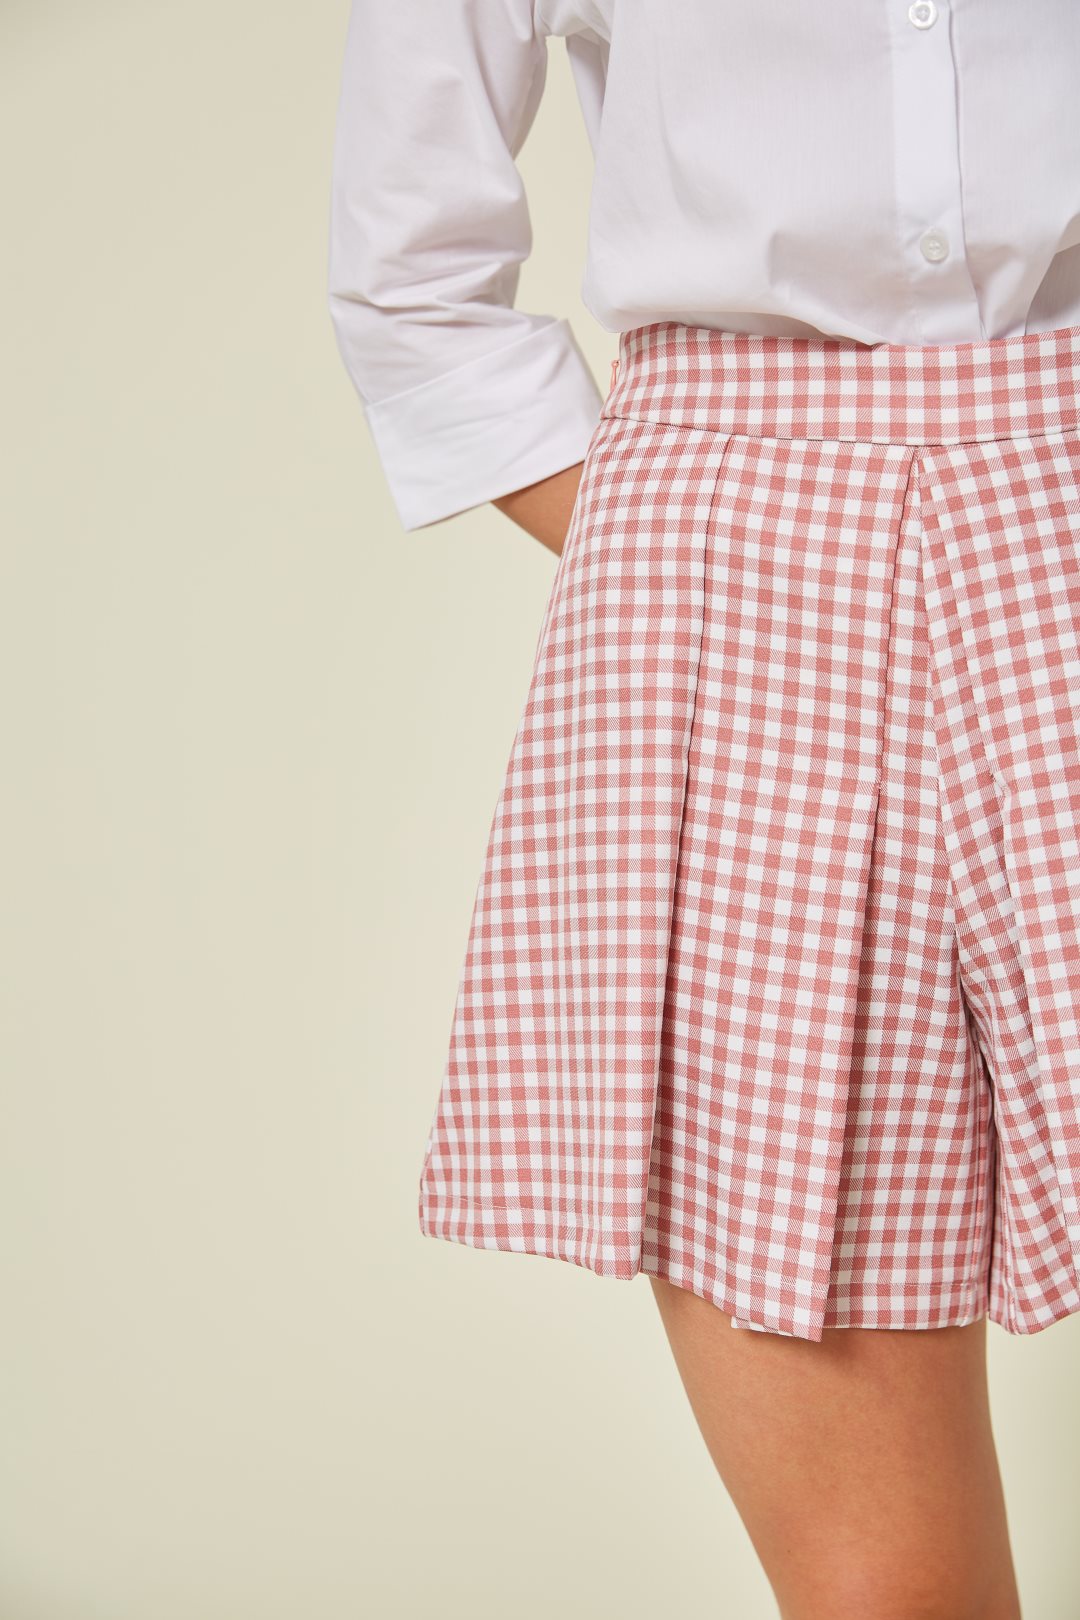 Skirt-type shorts